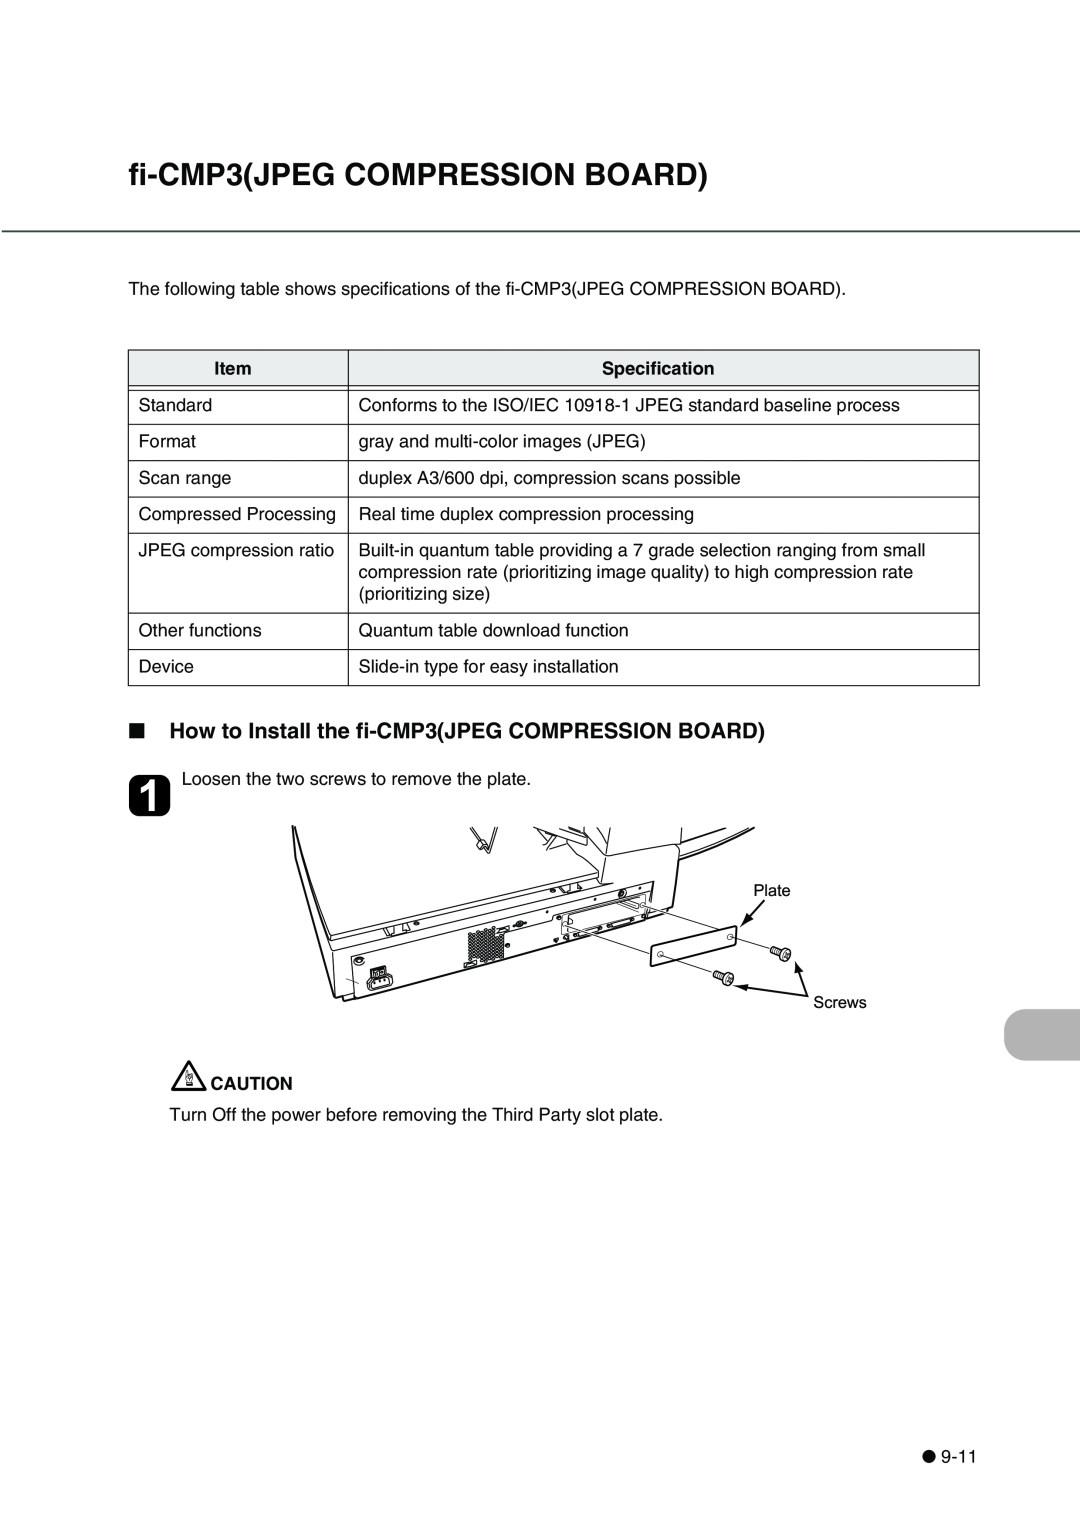 Fujitsu fi-4340C manual Plate Screws, How to Install the fi-CMP3JPEG COMPRESSION BOARD, Specification 